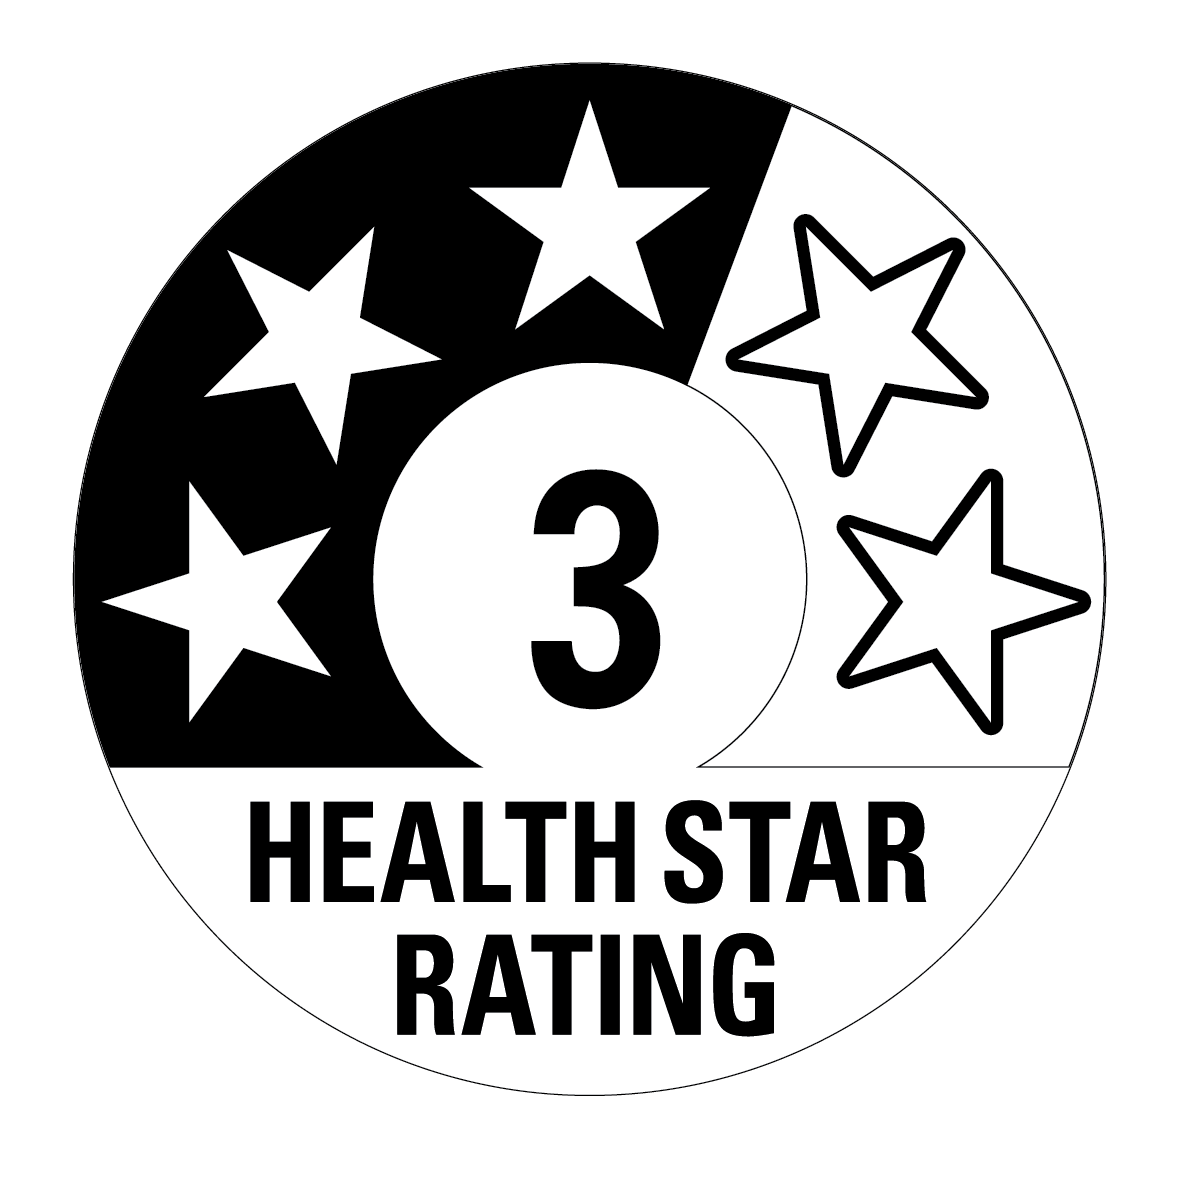 Health Star Rating displaying a 3 rating